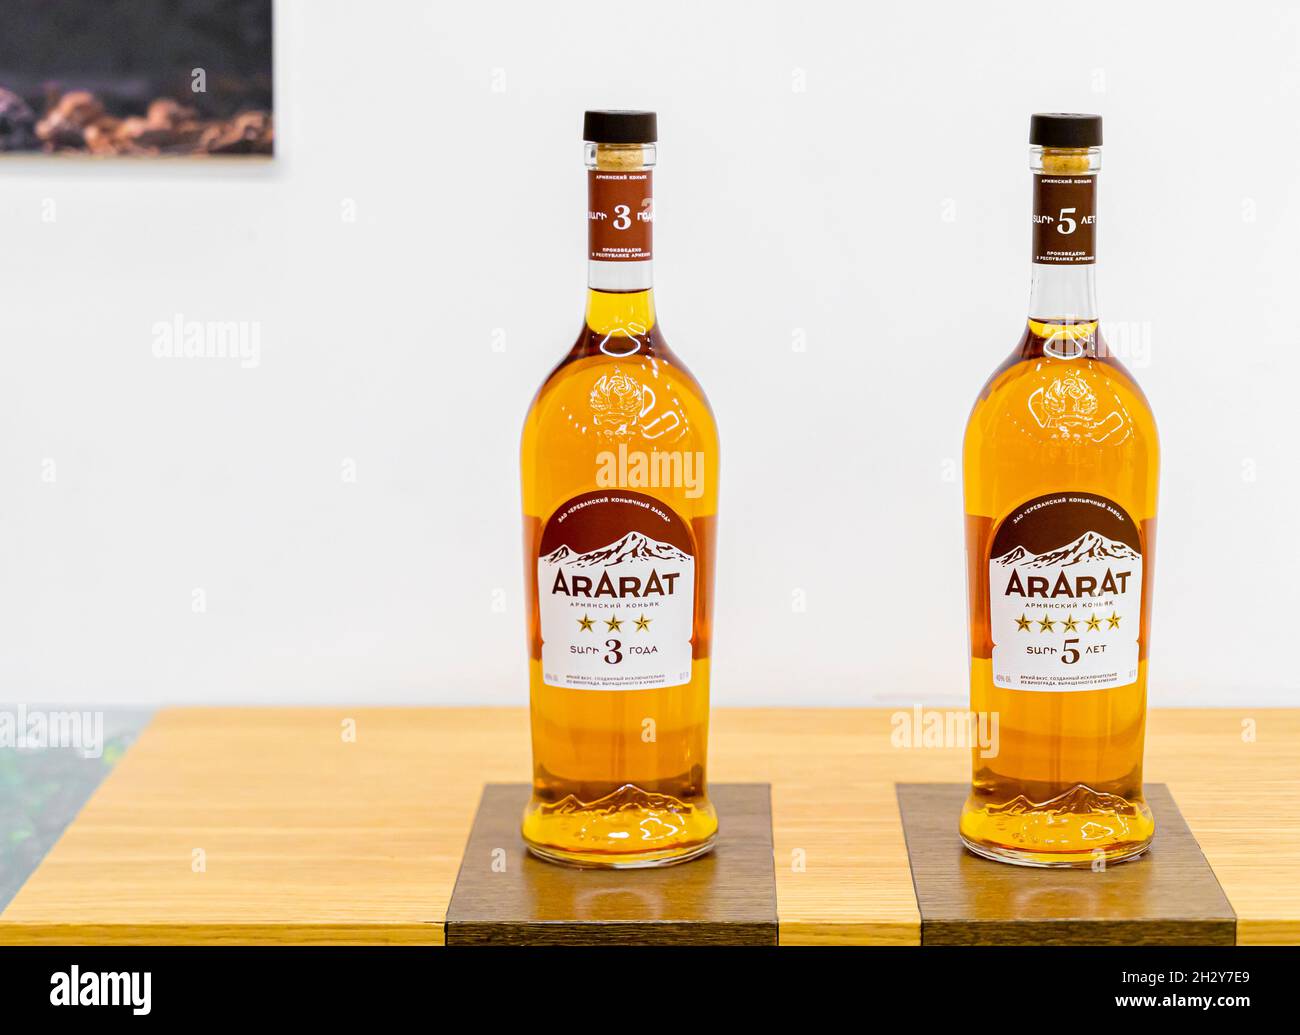 Ararat 3 Year brandy bottles, on display at Armenia pavillion in VDNKH, Moscow Stock Photo